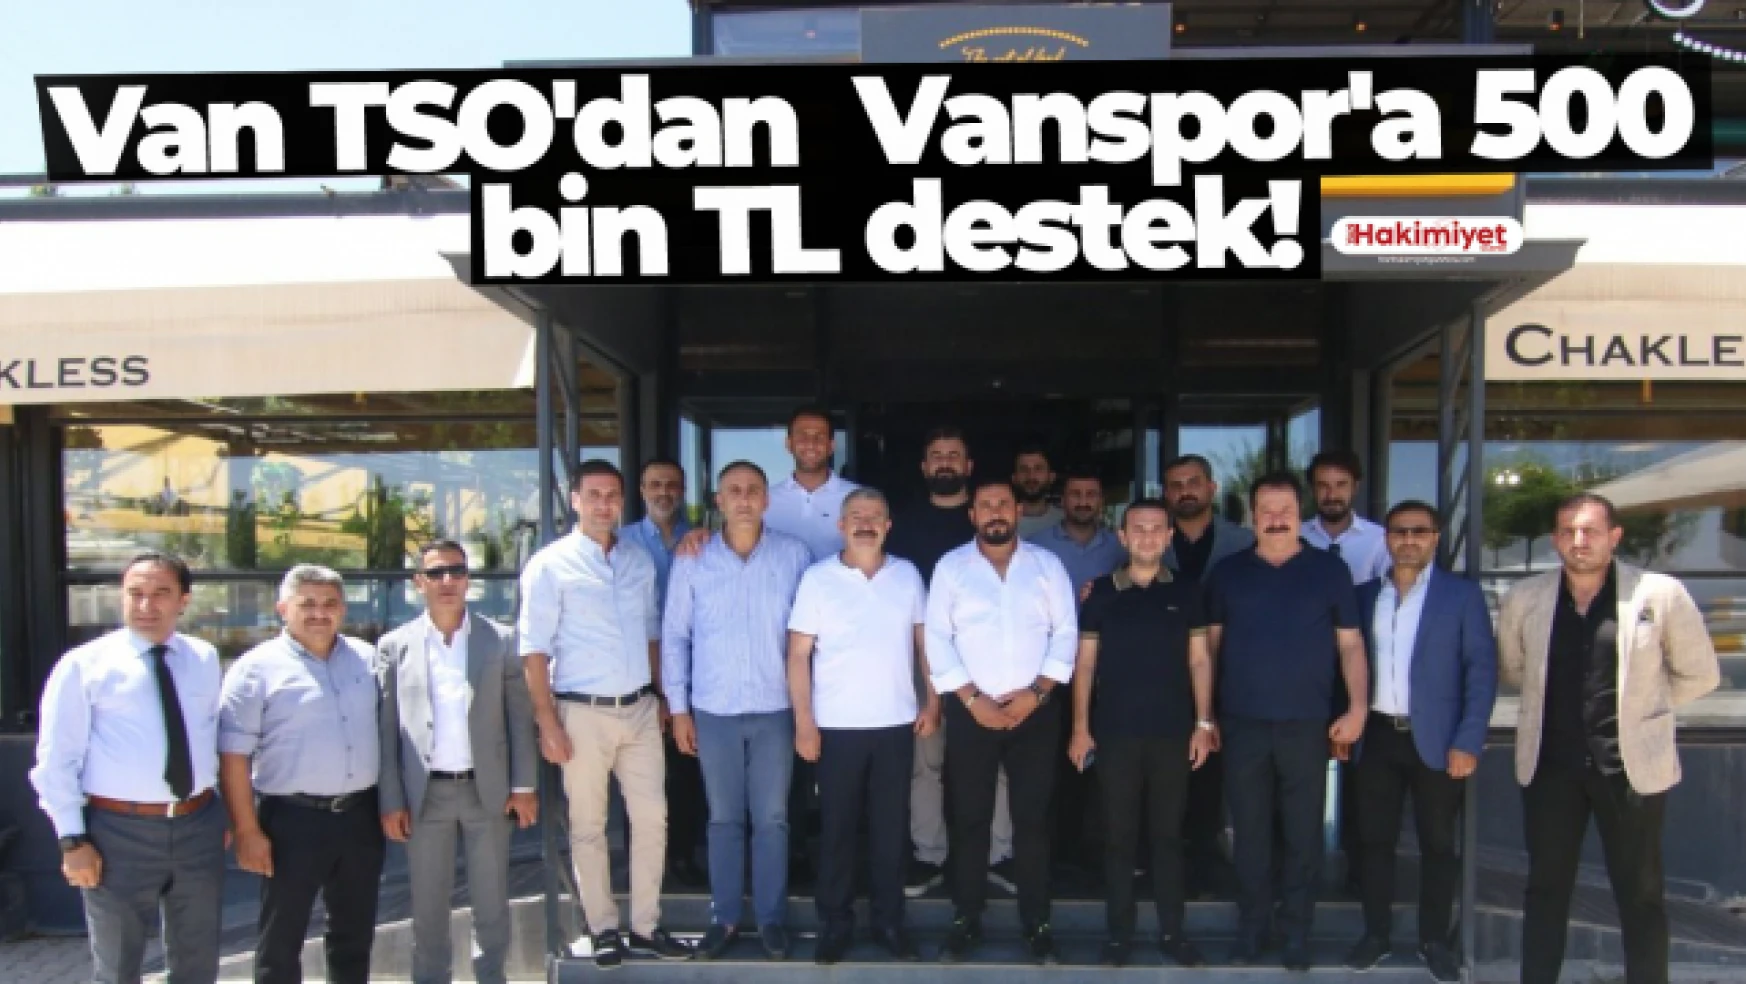 Van TSO'dan Vanspor'a 500 bin TL destek!